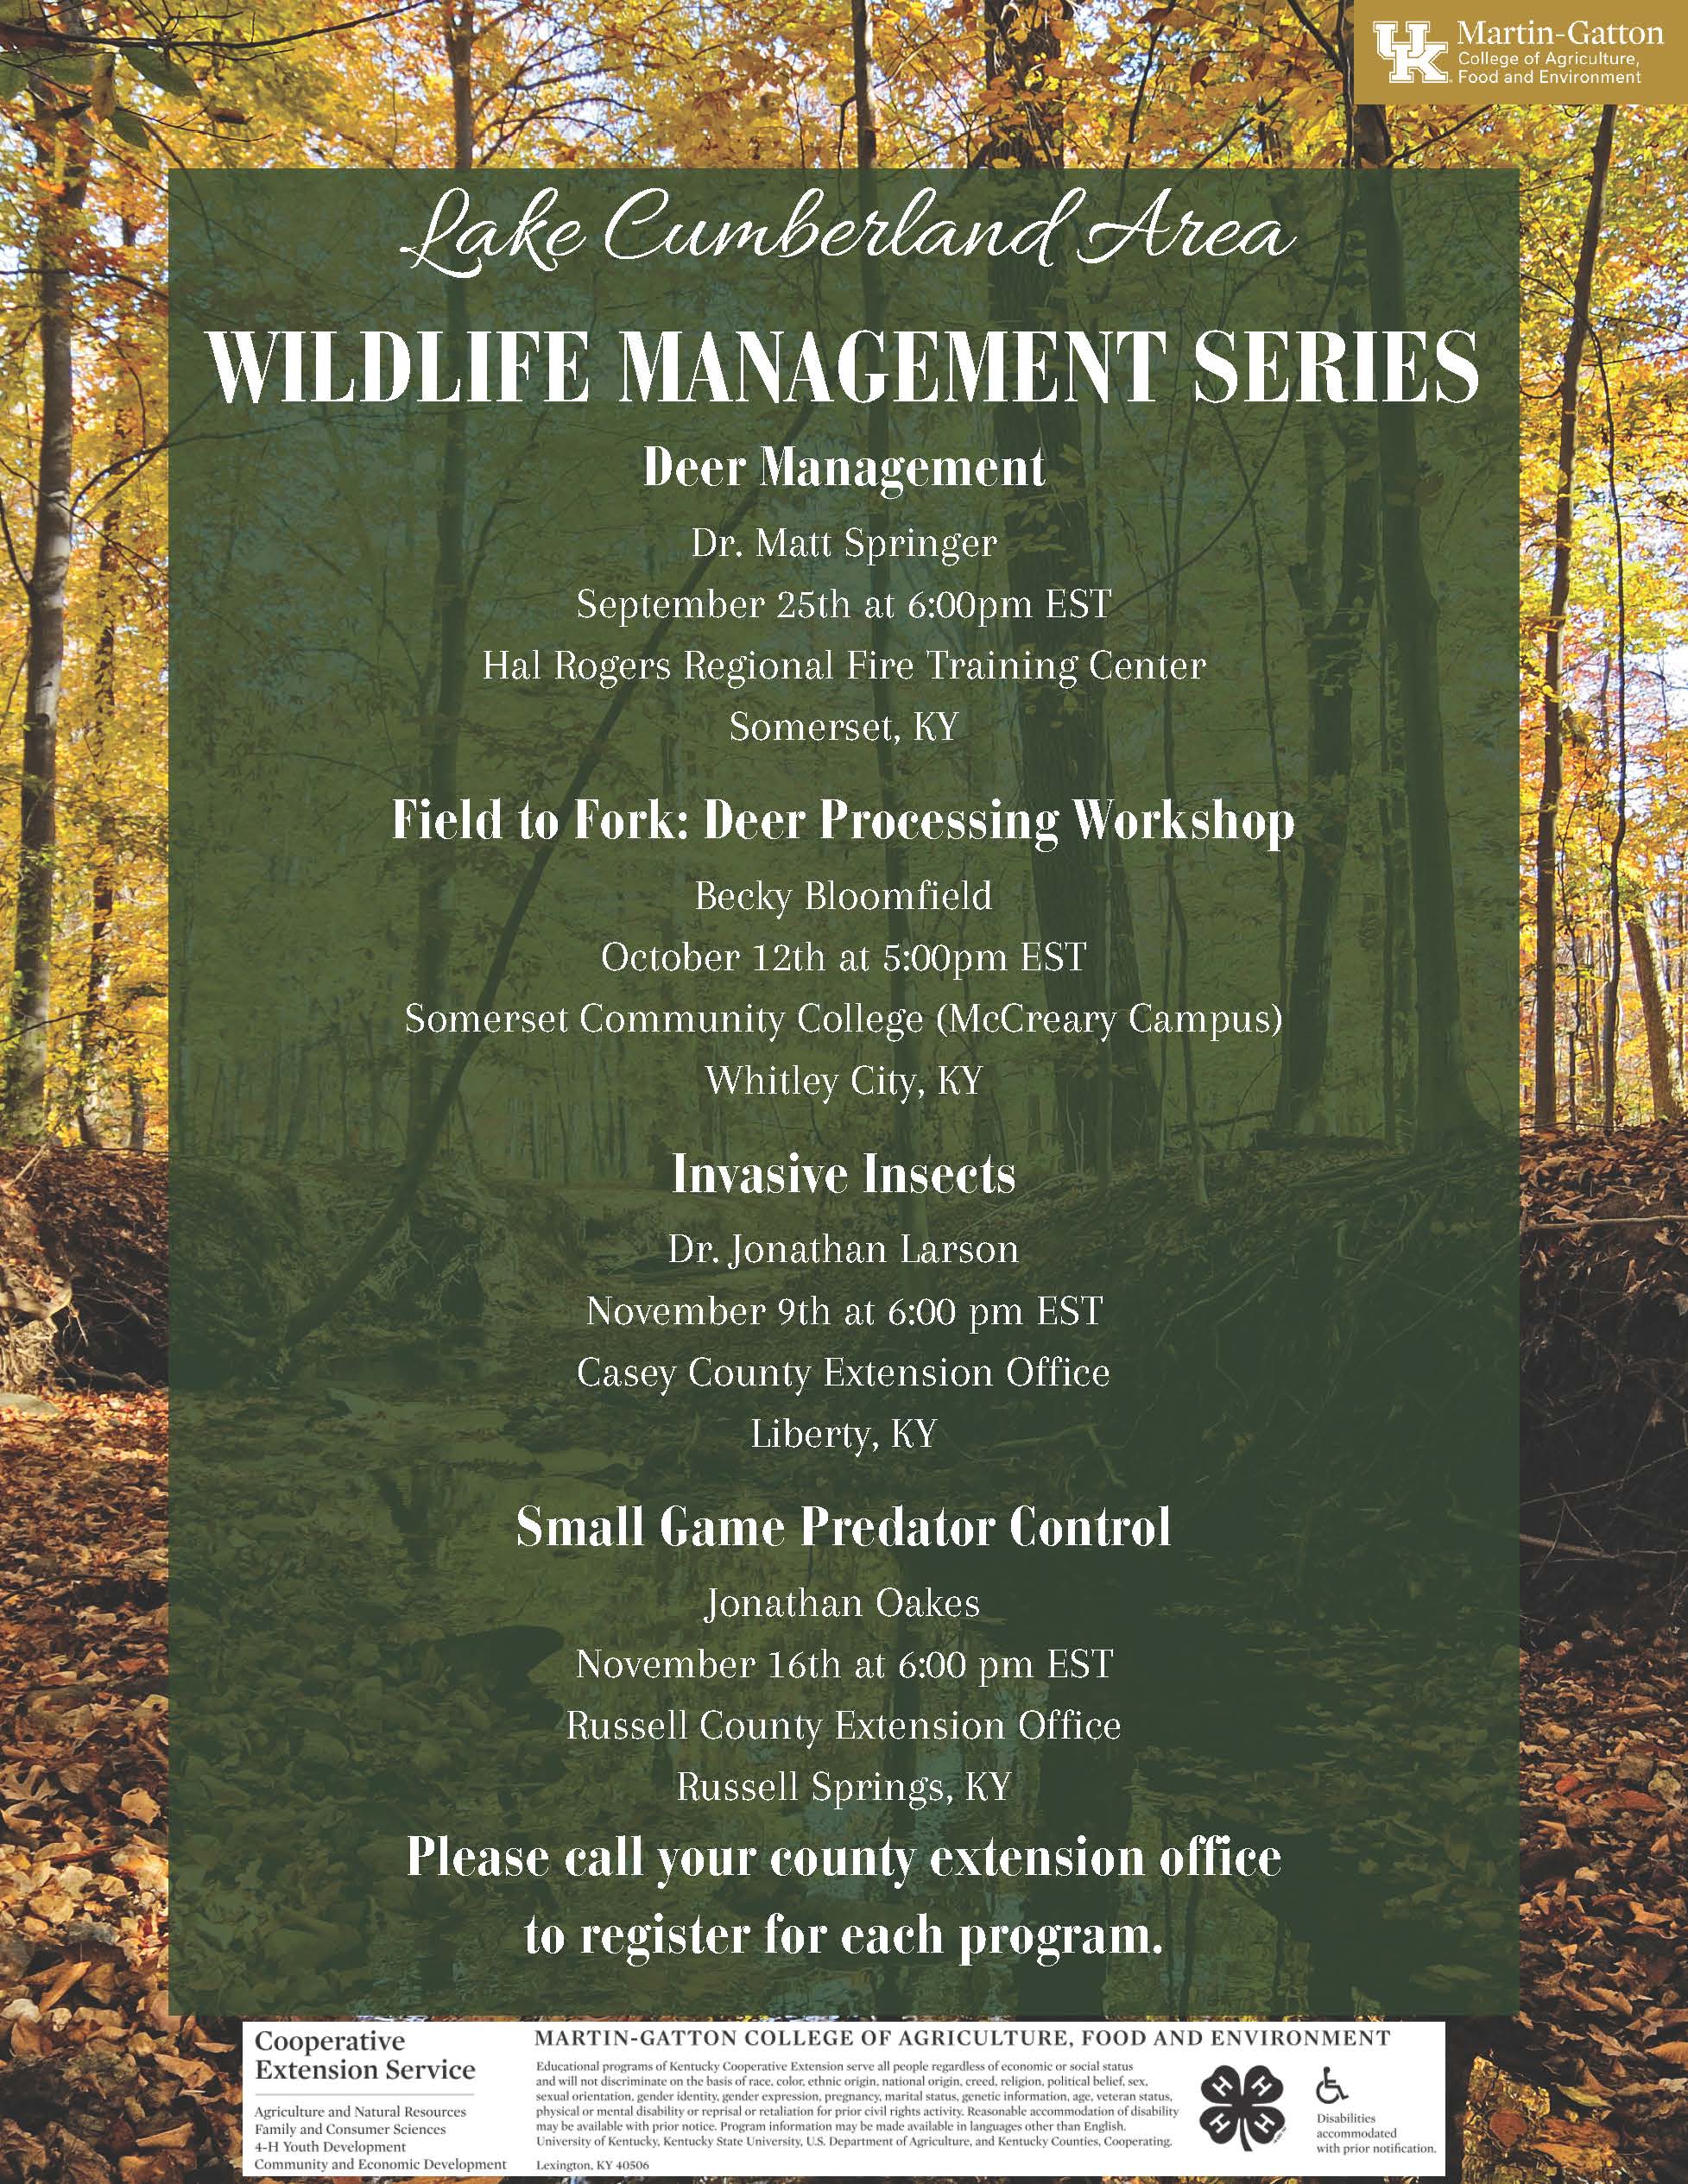 flyer for wildlife management series classes starting in September. Call 606-679-6361 for more information 